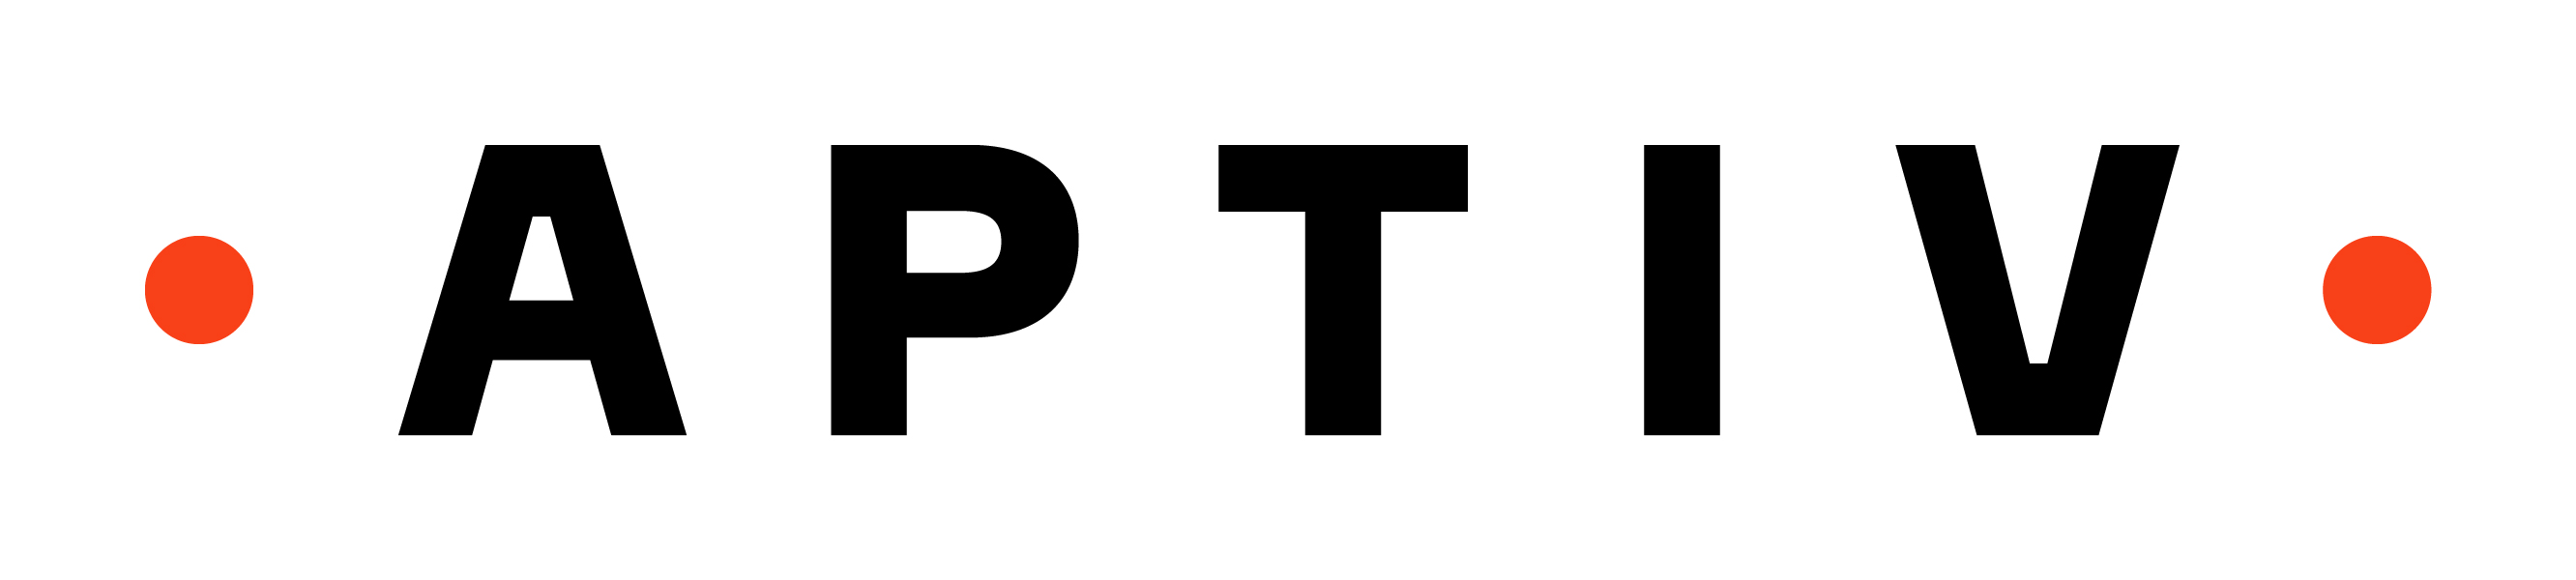 aptiv logo color rgb